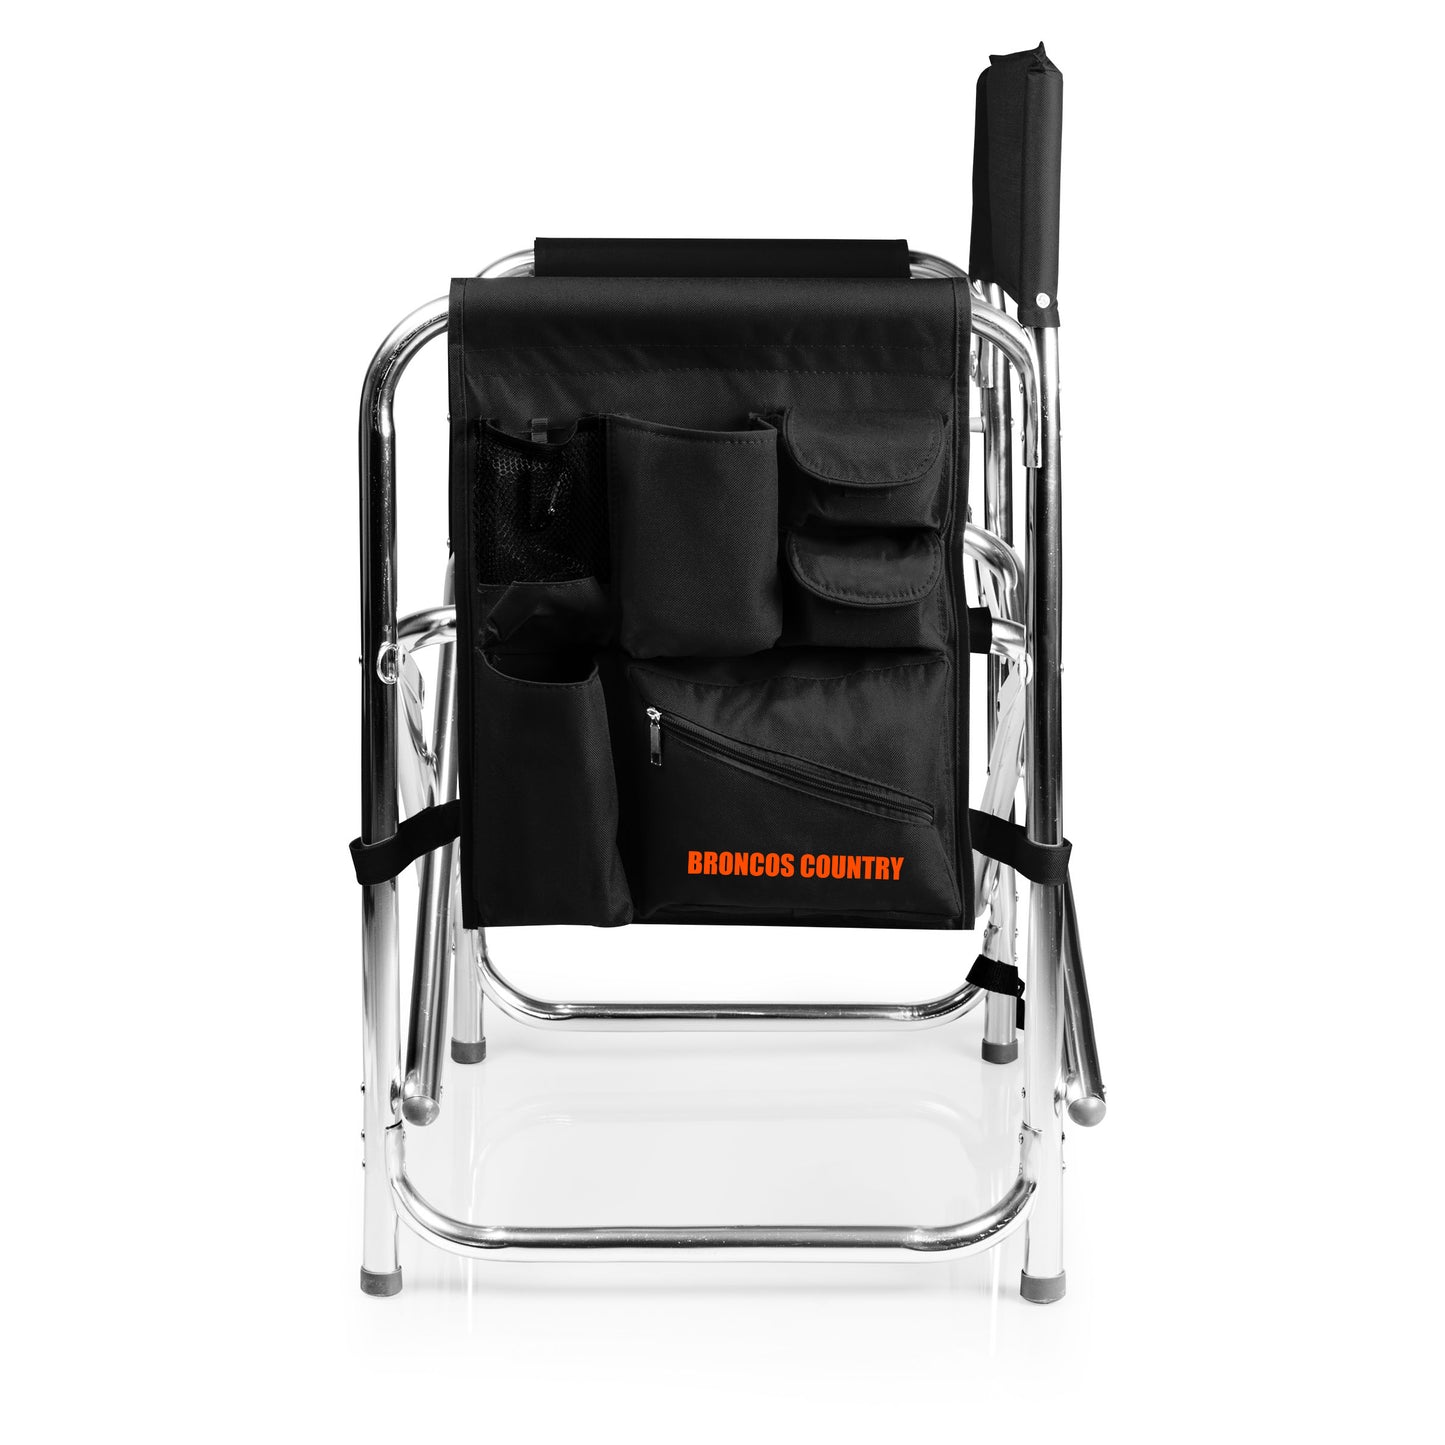 Denver Broncos - Sports Chair